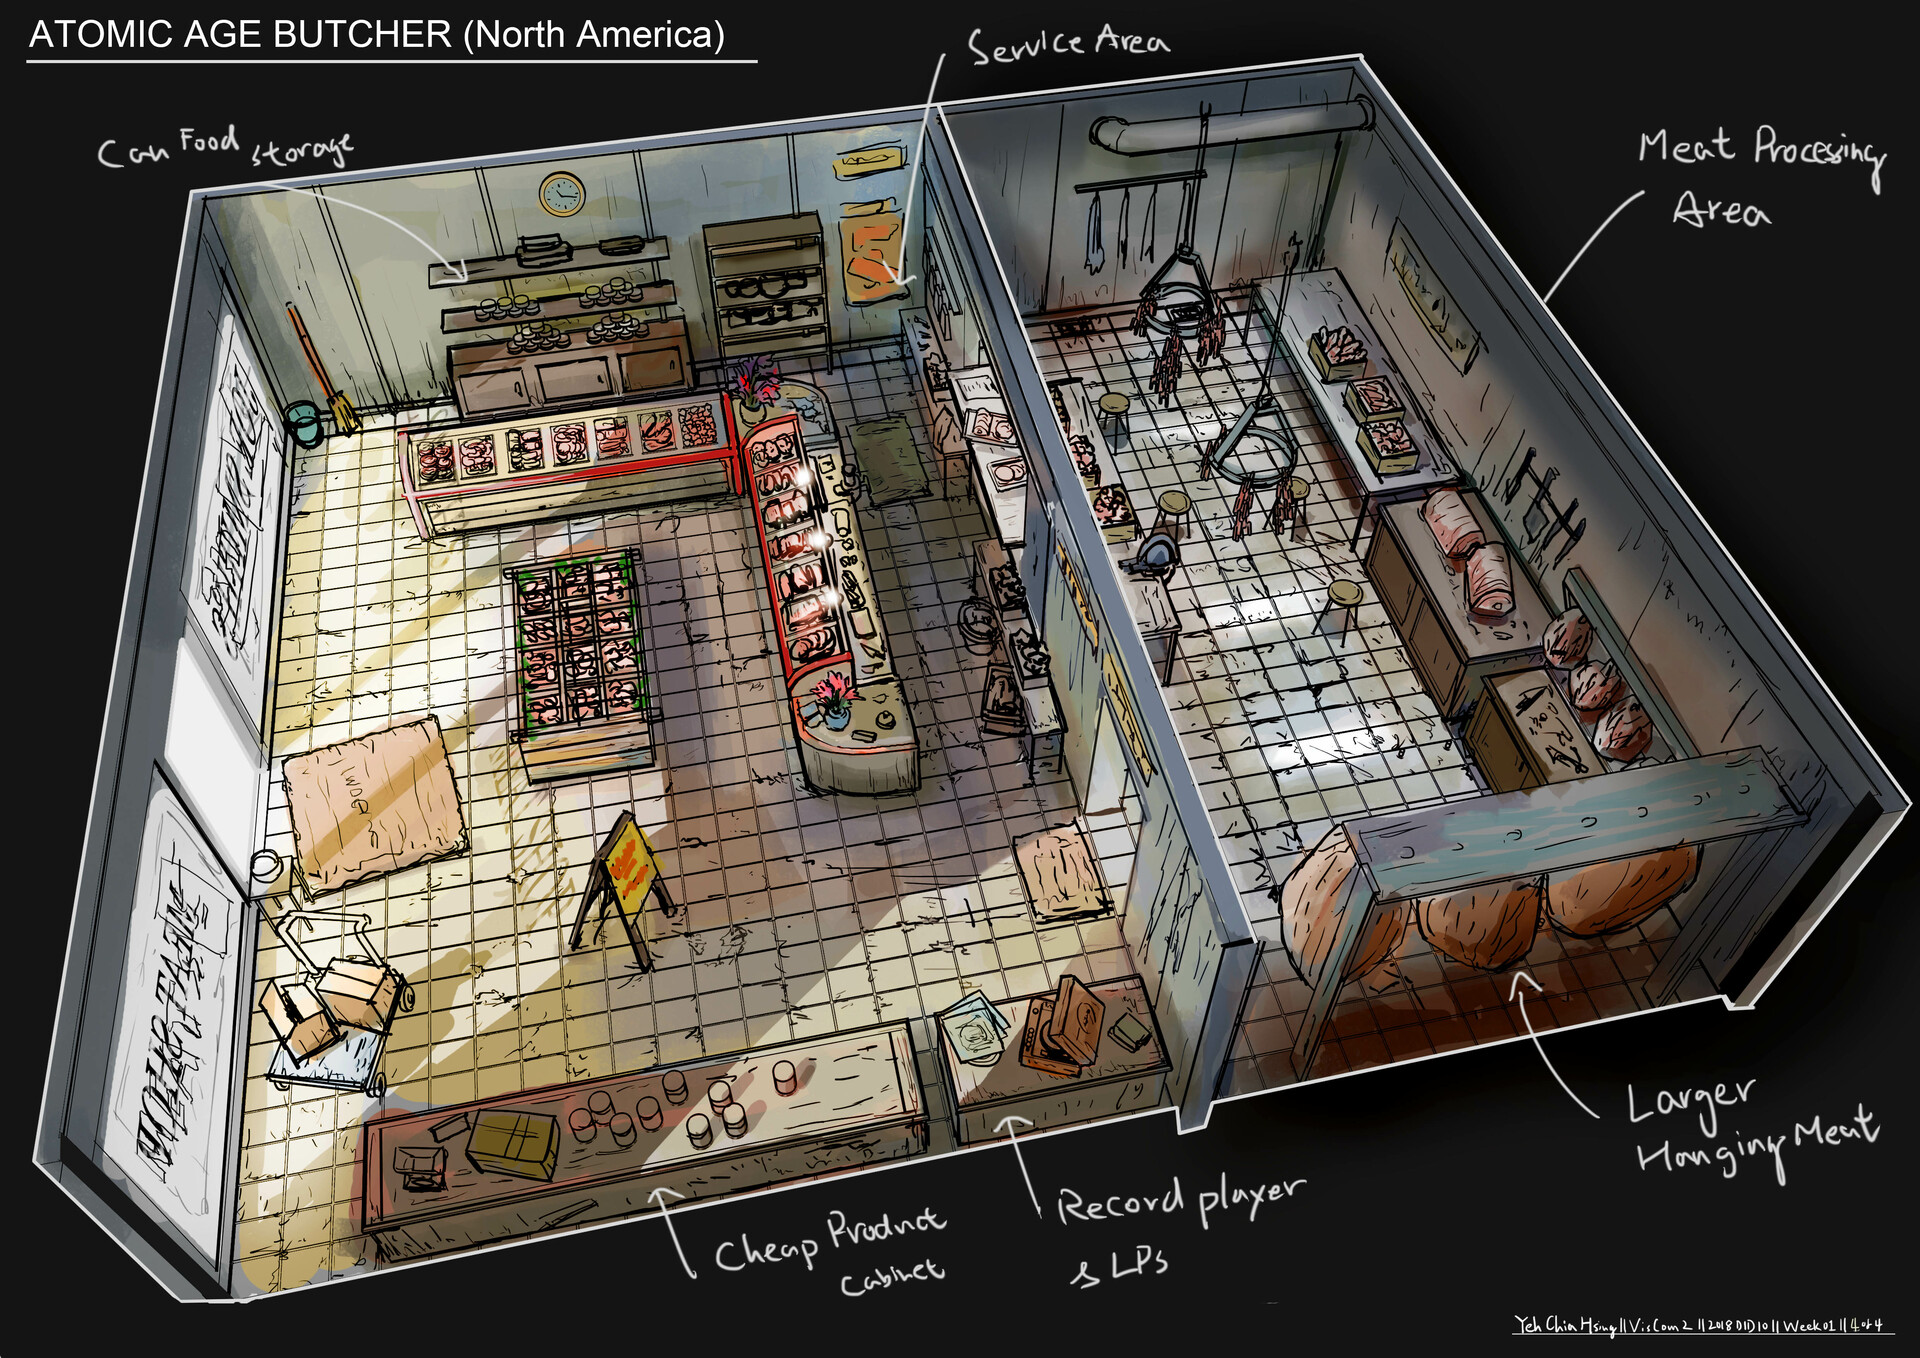 Butcher Shop Design Layout